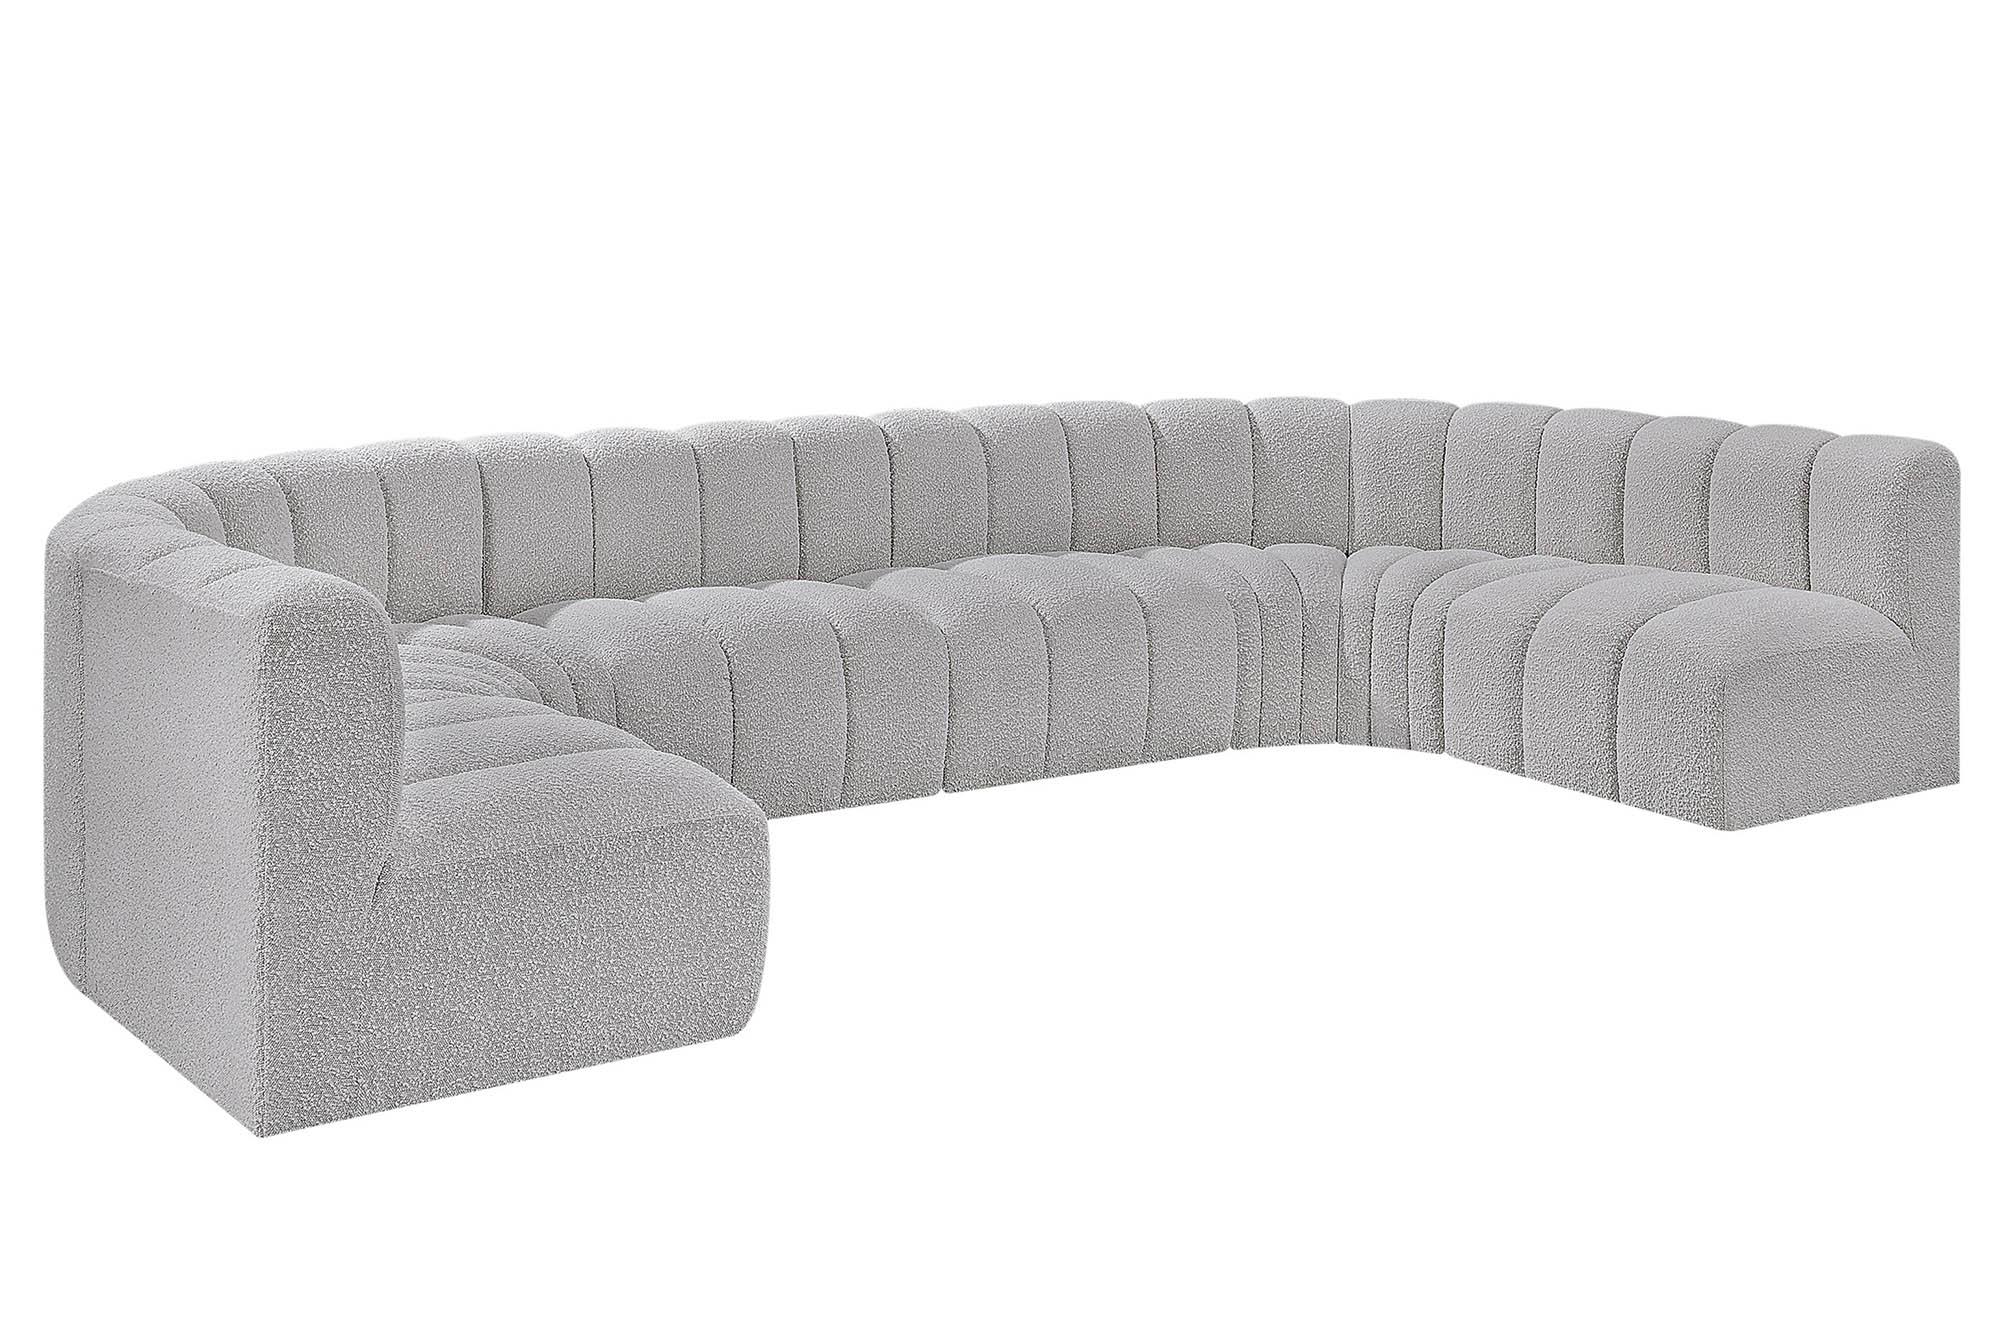 Contemporary, Modern Modular Sectional Sofa ARC 102Grey-S8A 102Grey-S8A in Gray 